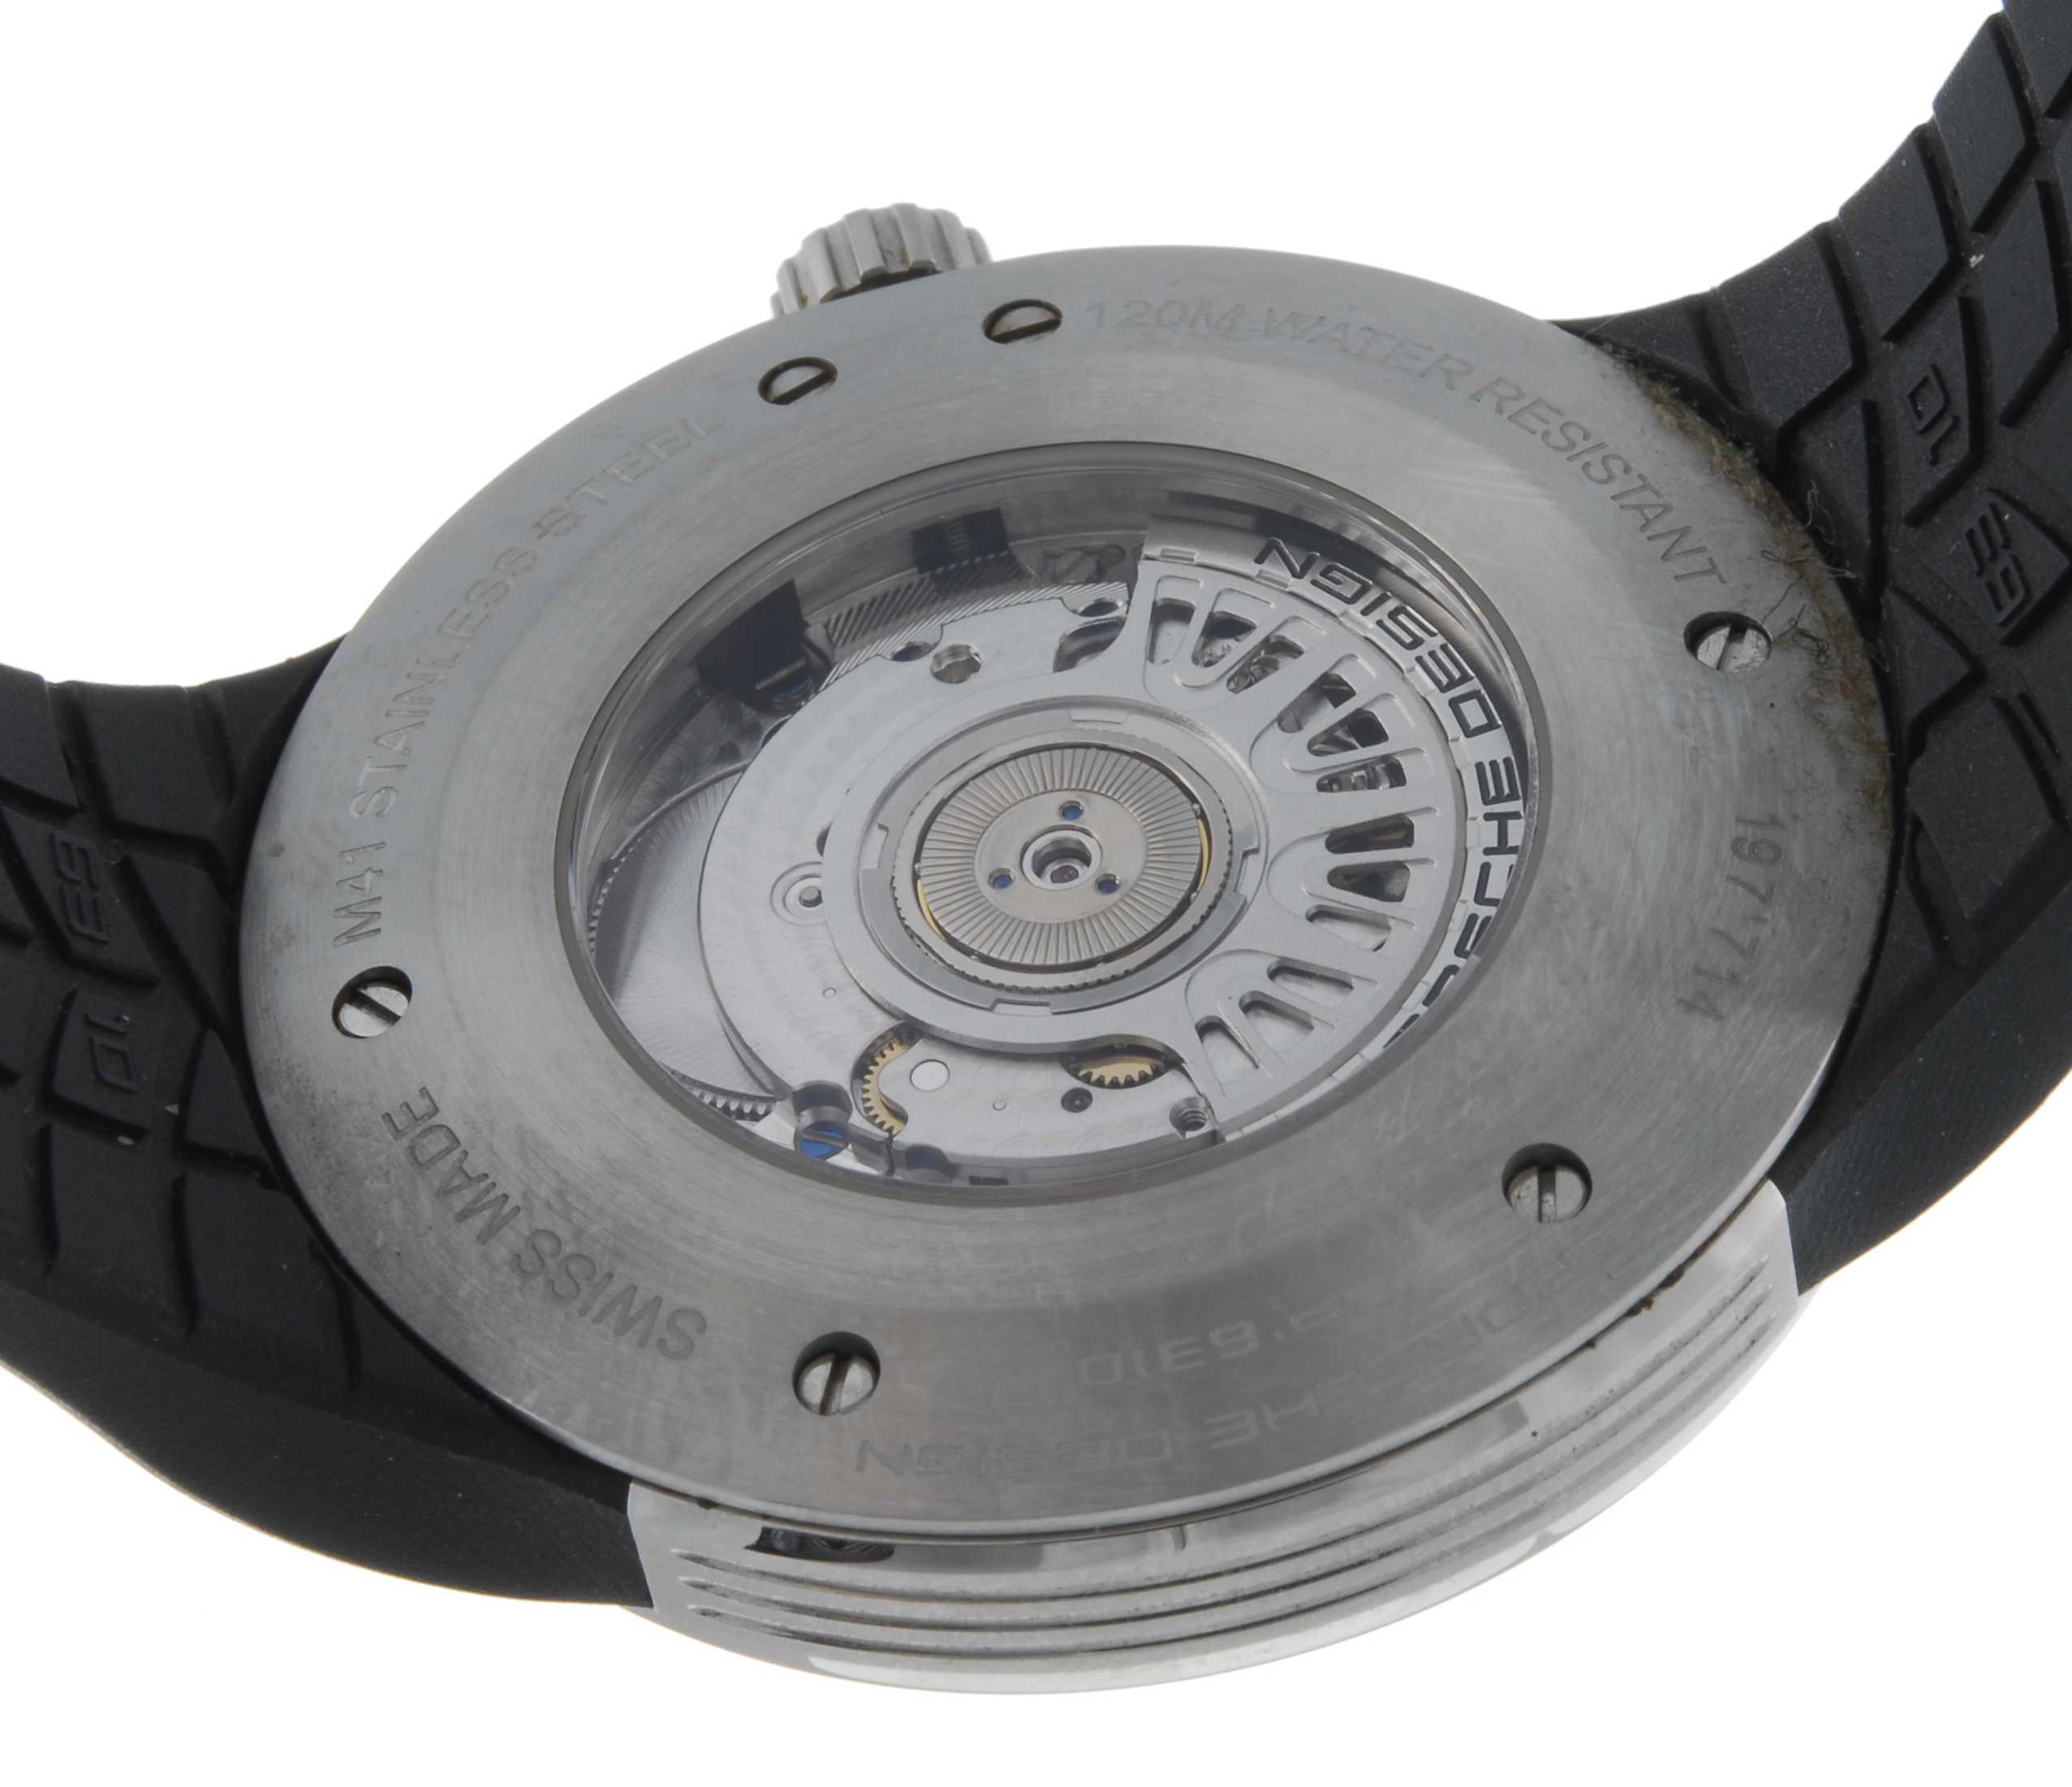 PORSCHE DESIGN - a gentleman's Flat Six wrist watch. Stainless steel case with calibrated bezel. - Image 2 of 4